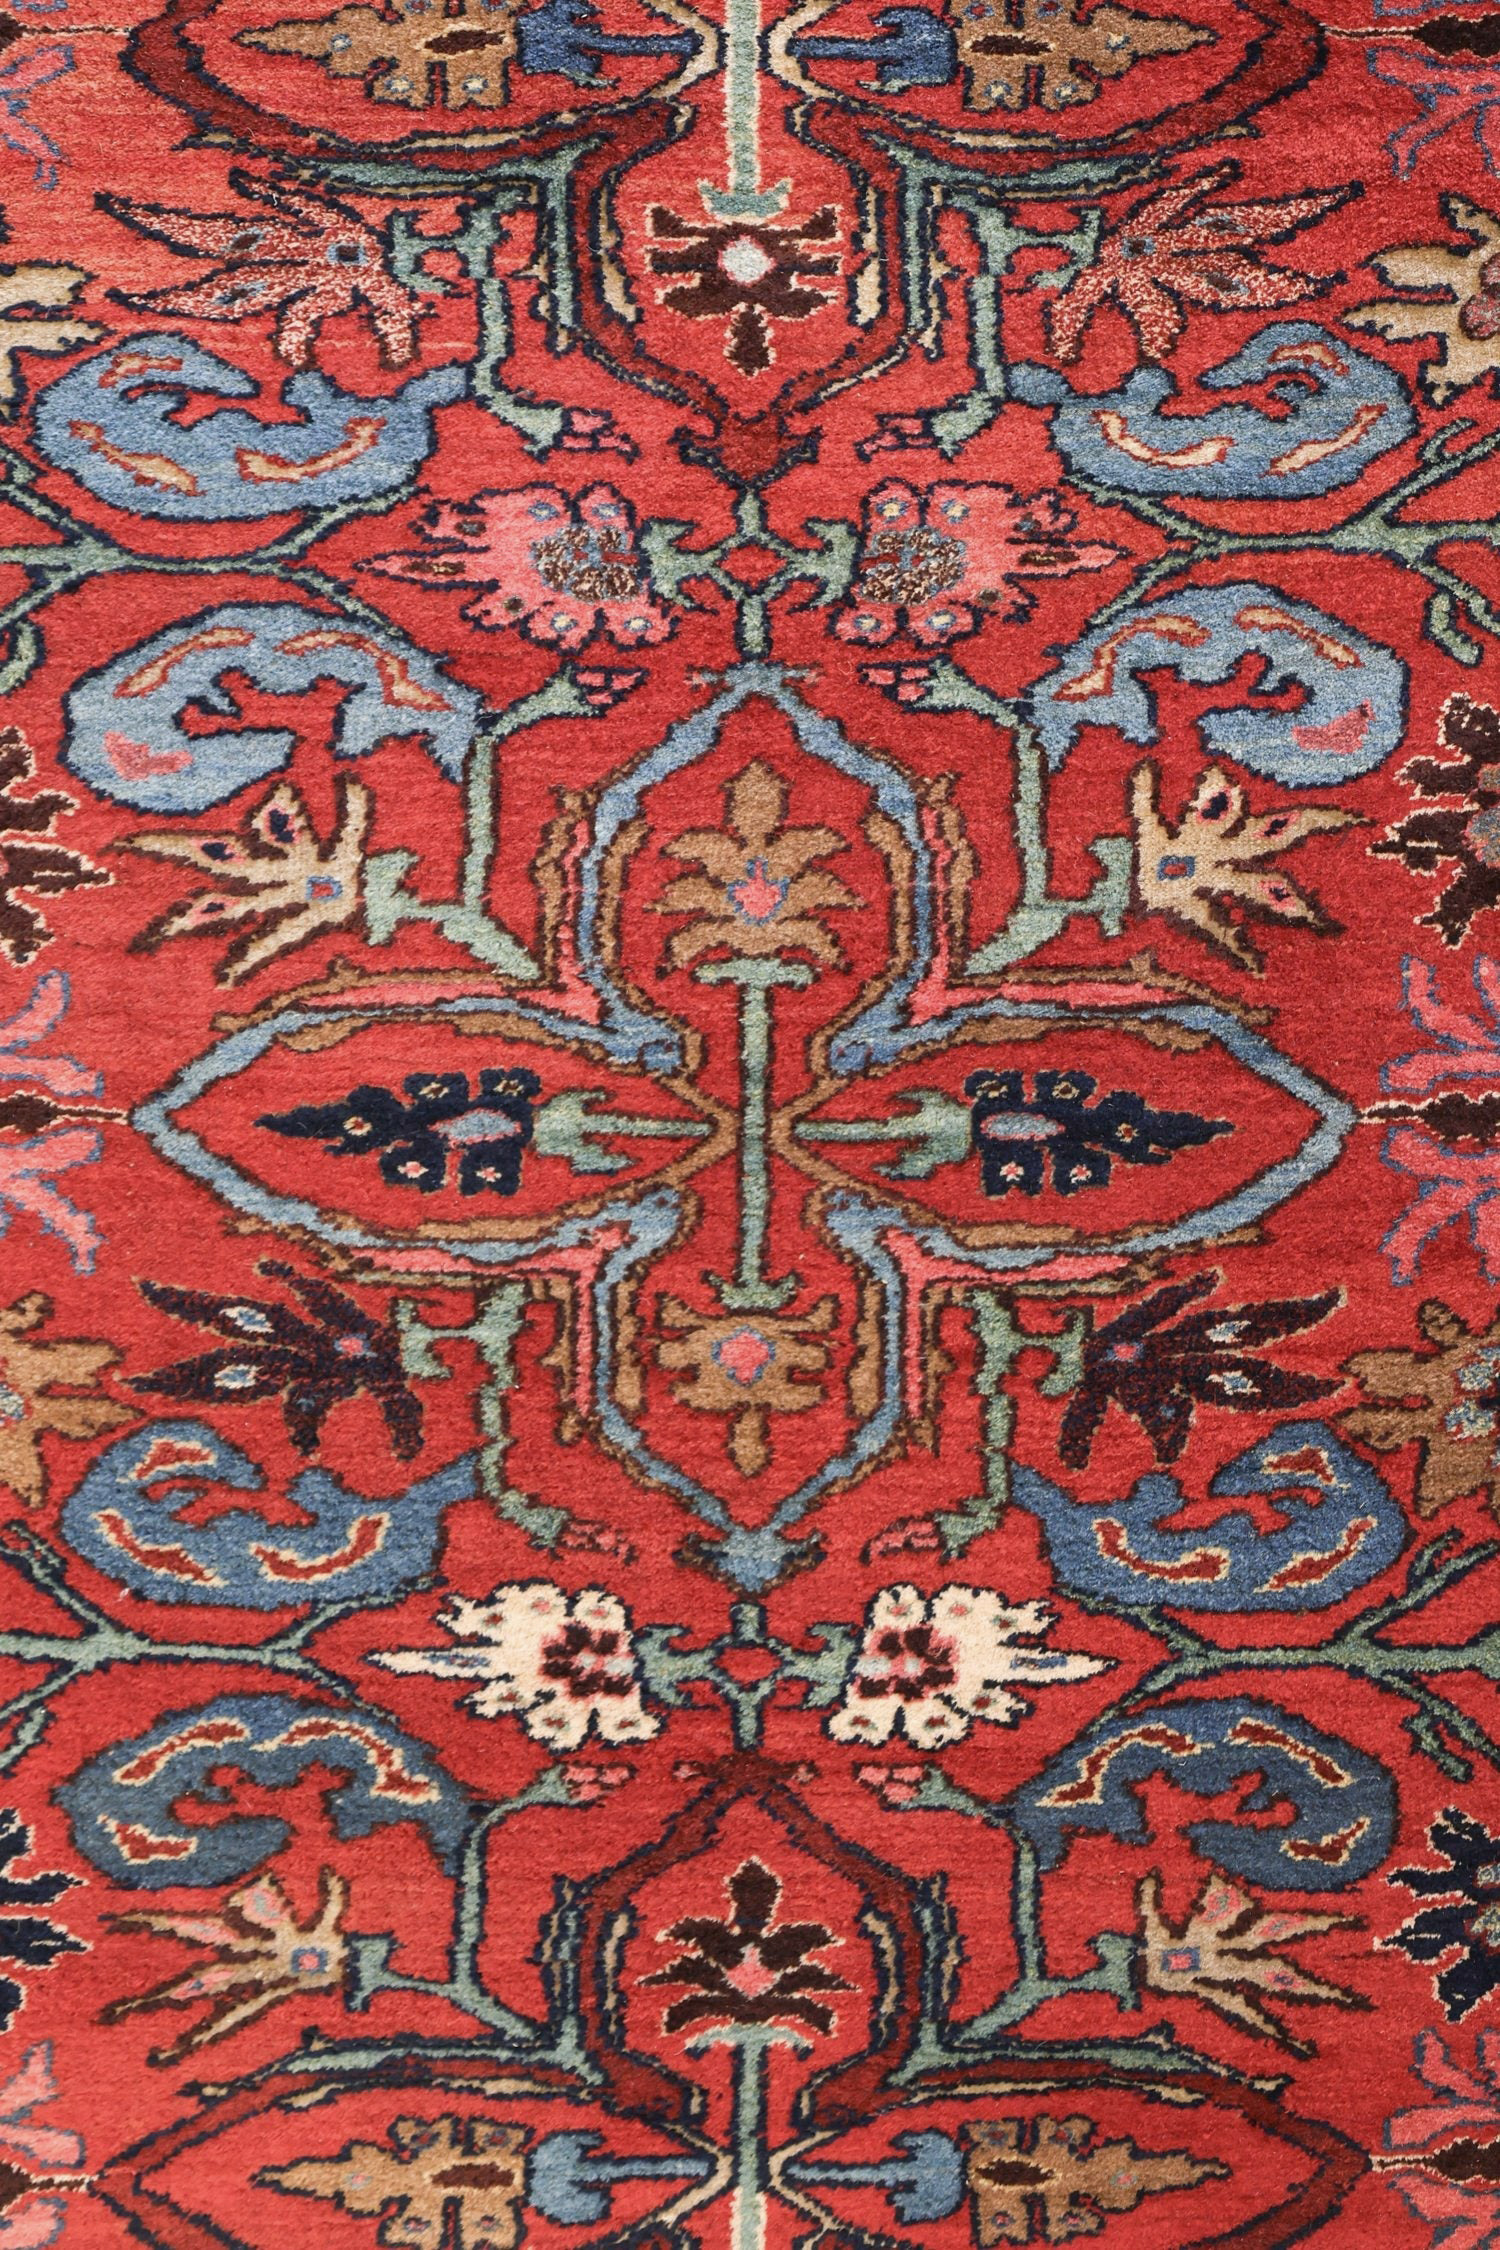 Quatrefoil motif field detail from antique Bidjar rug.